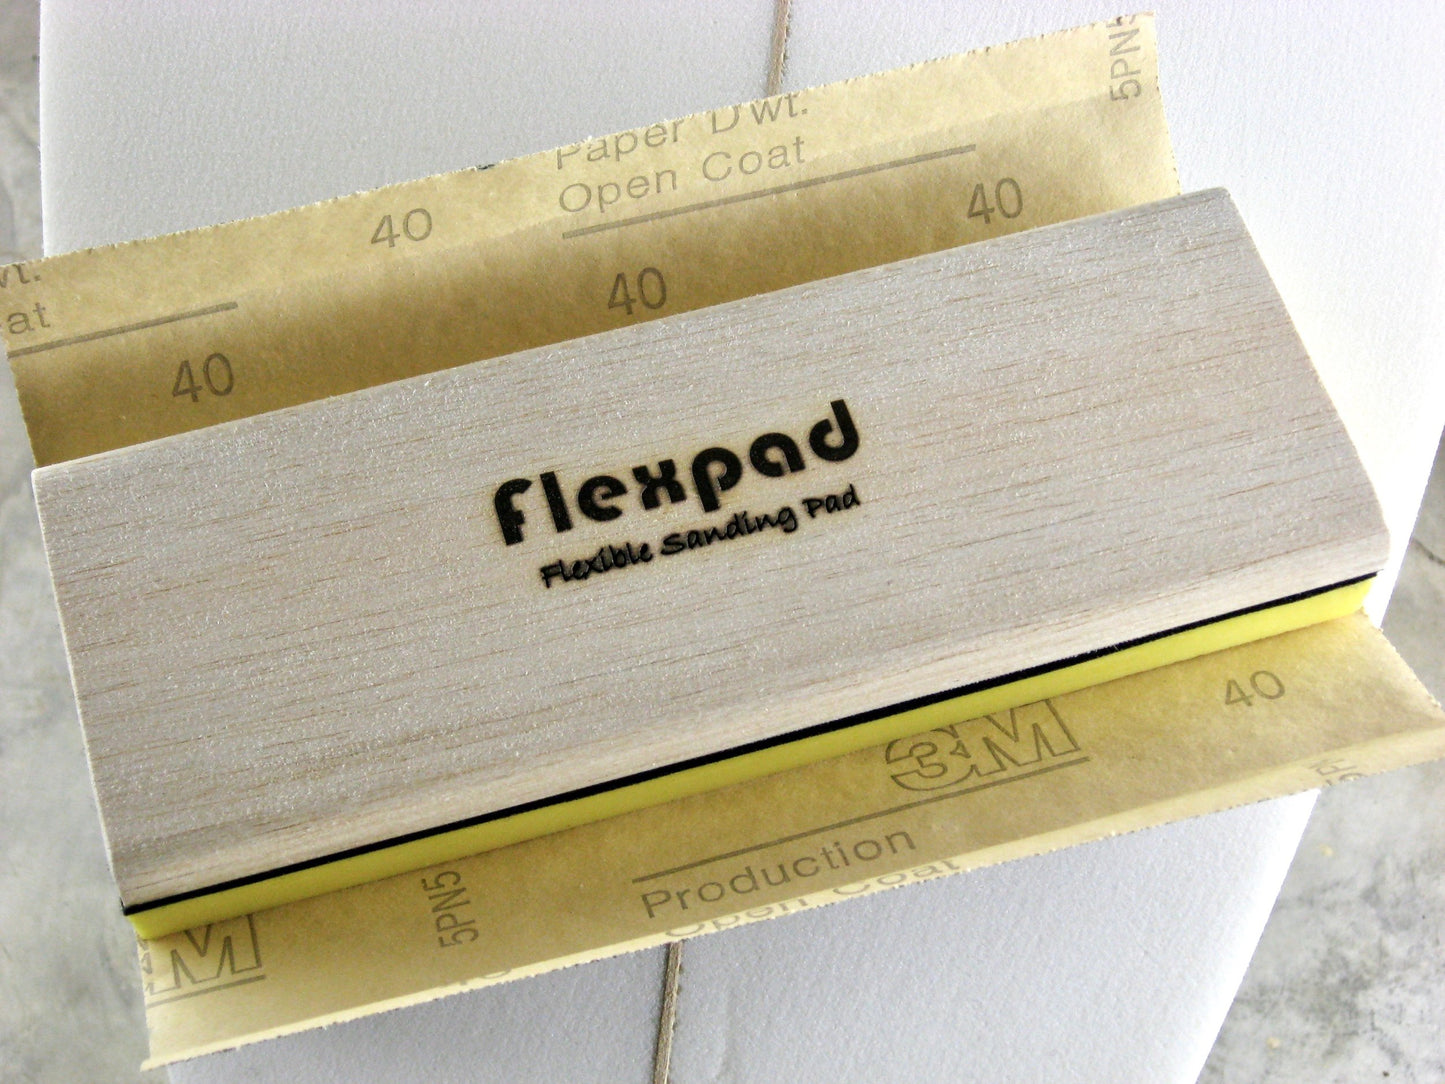 Flexpad Balsa Wood Shaping Block